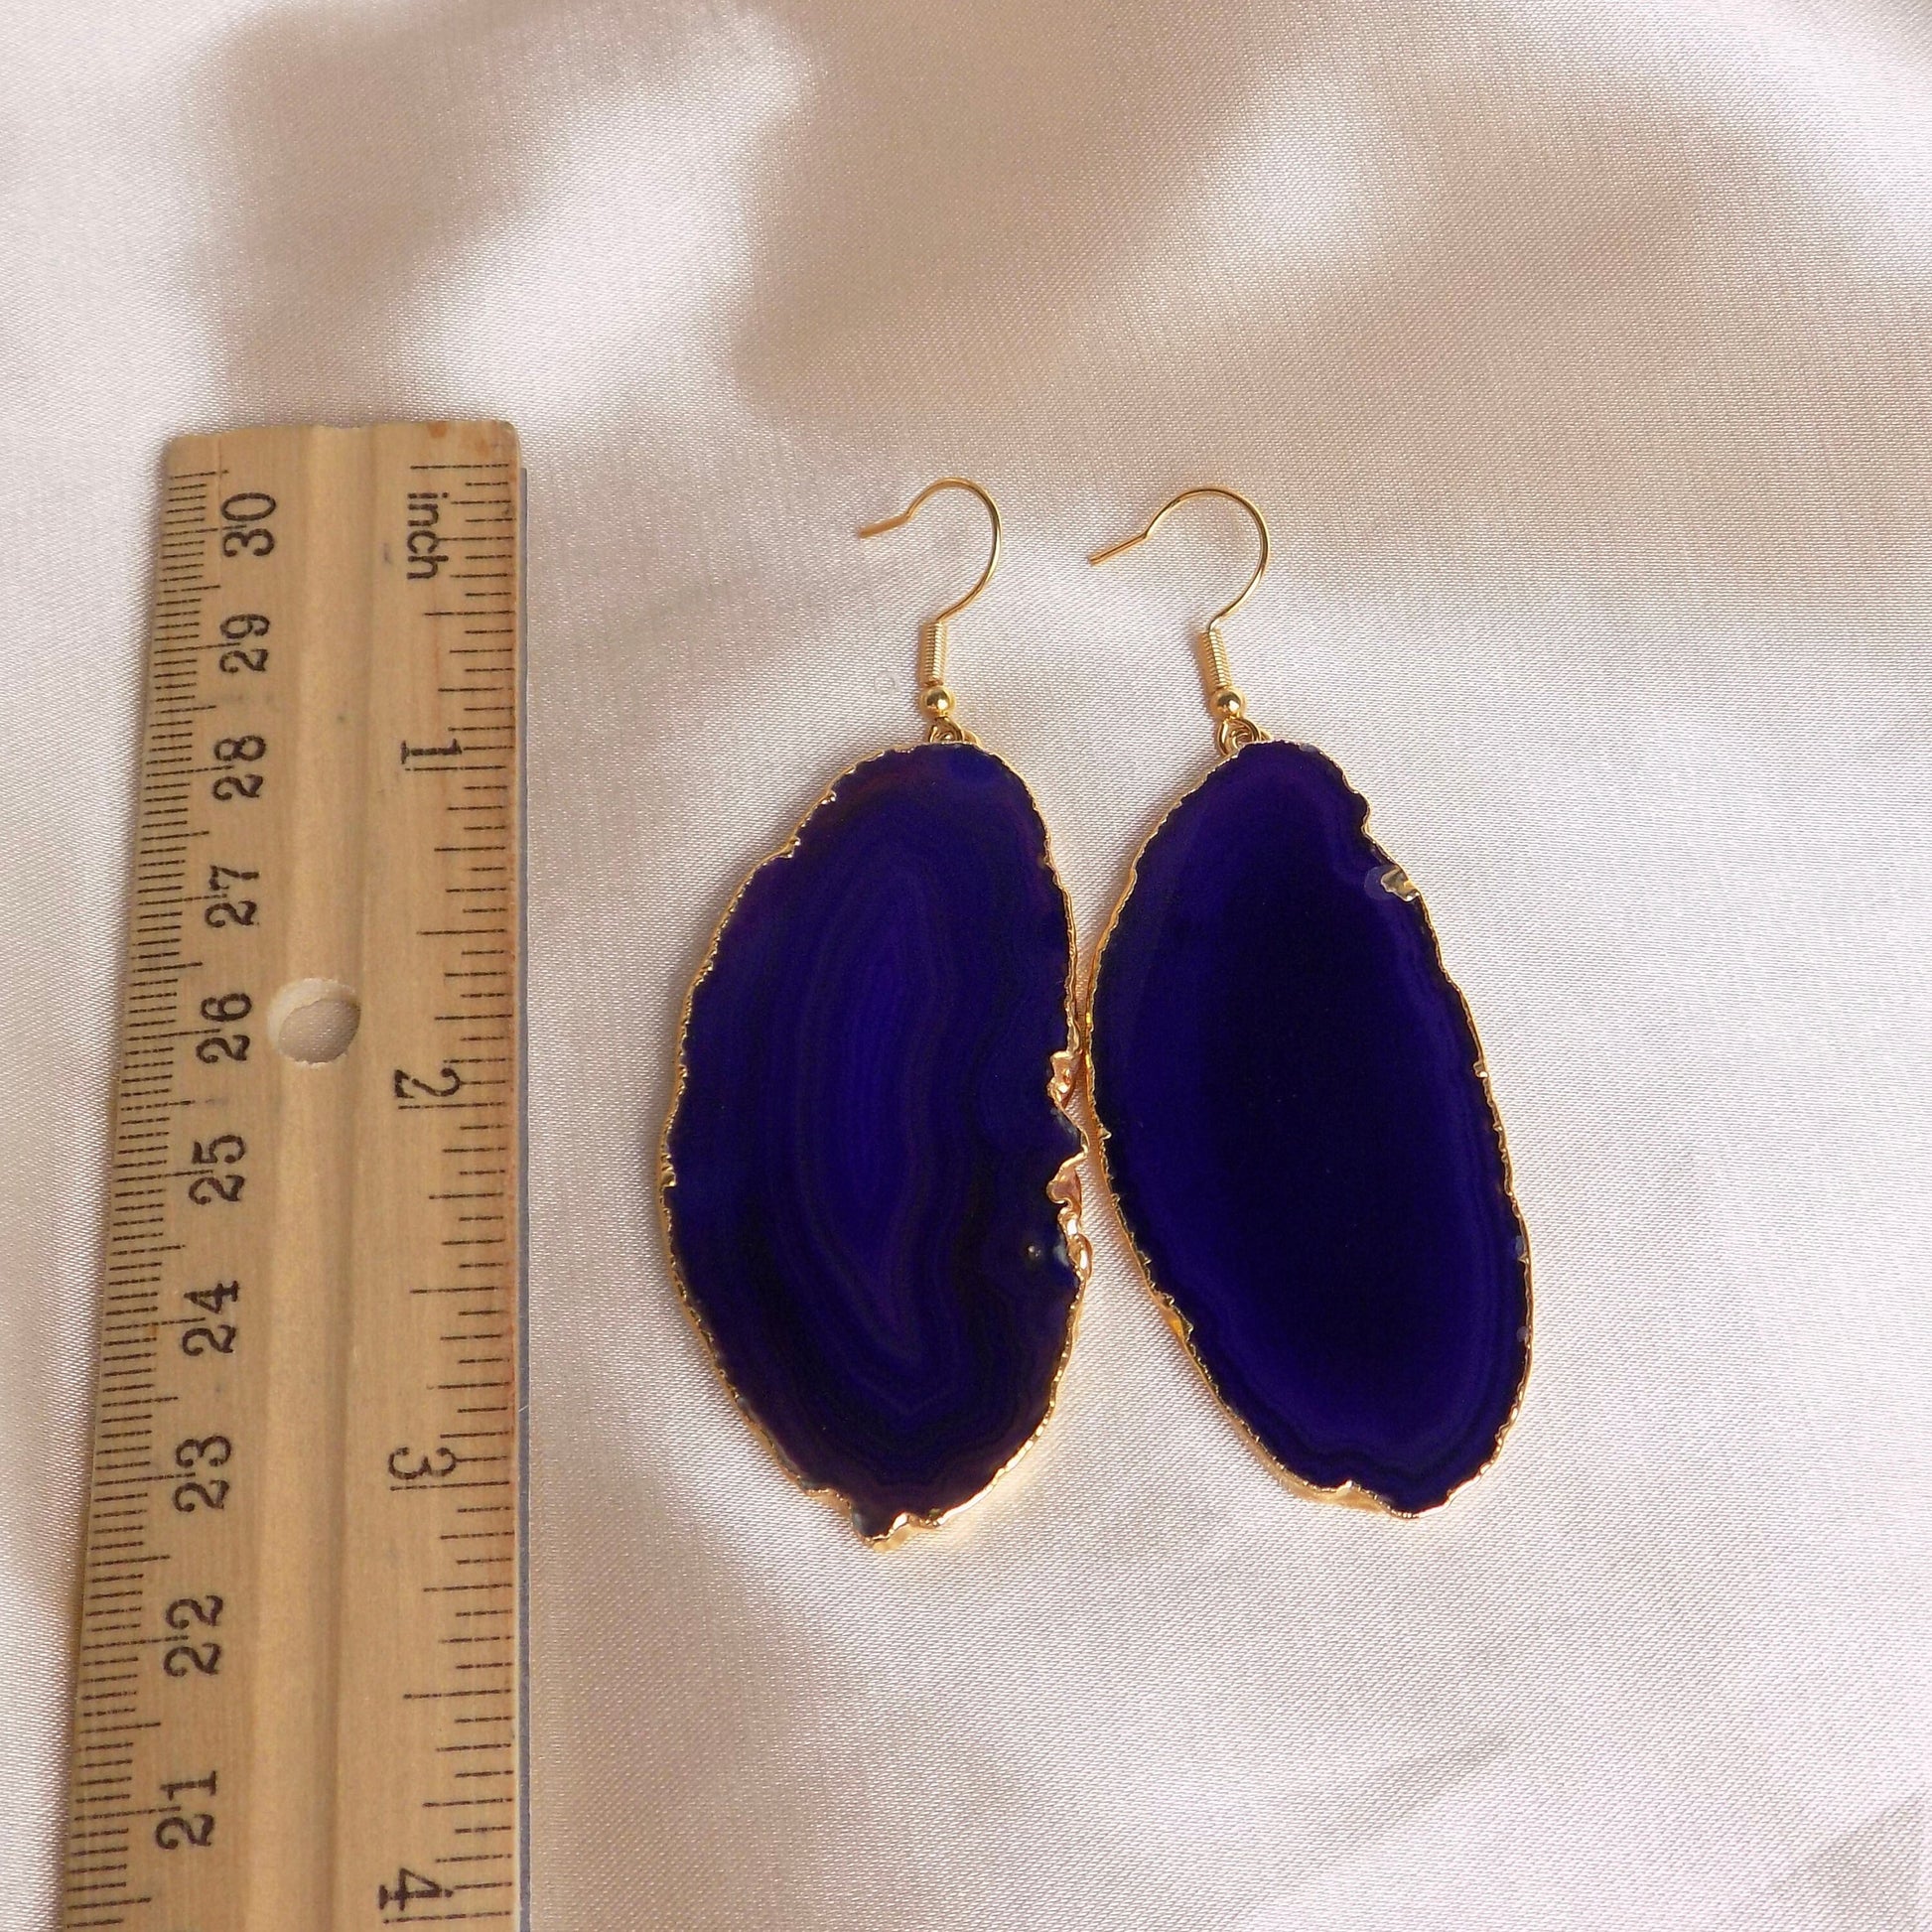 Large Agate Slice Earrings Purple Gold Dipped, Geode Earrings Dangle, Boho Gift Women, G15-83